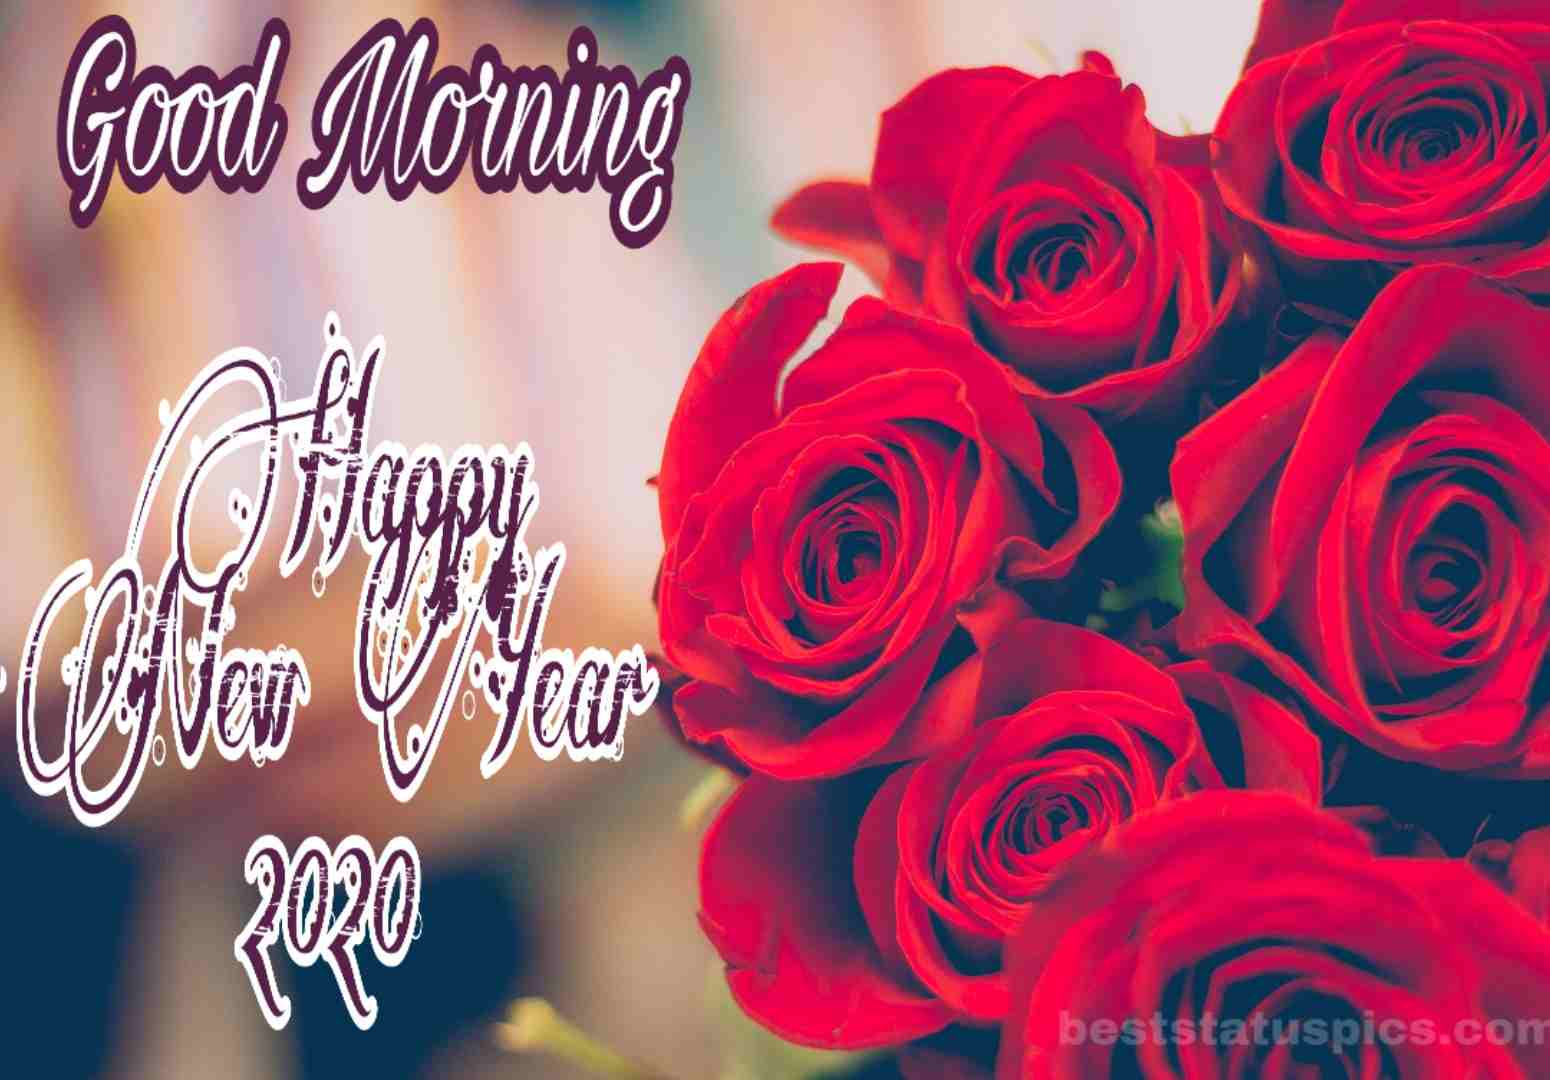 Free download Good Morning Happy New Year 2020 Whatsapp Dp Status